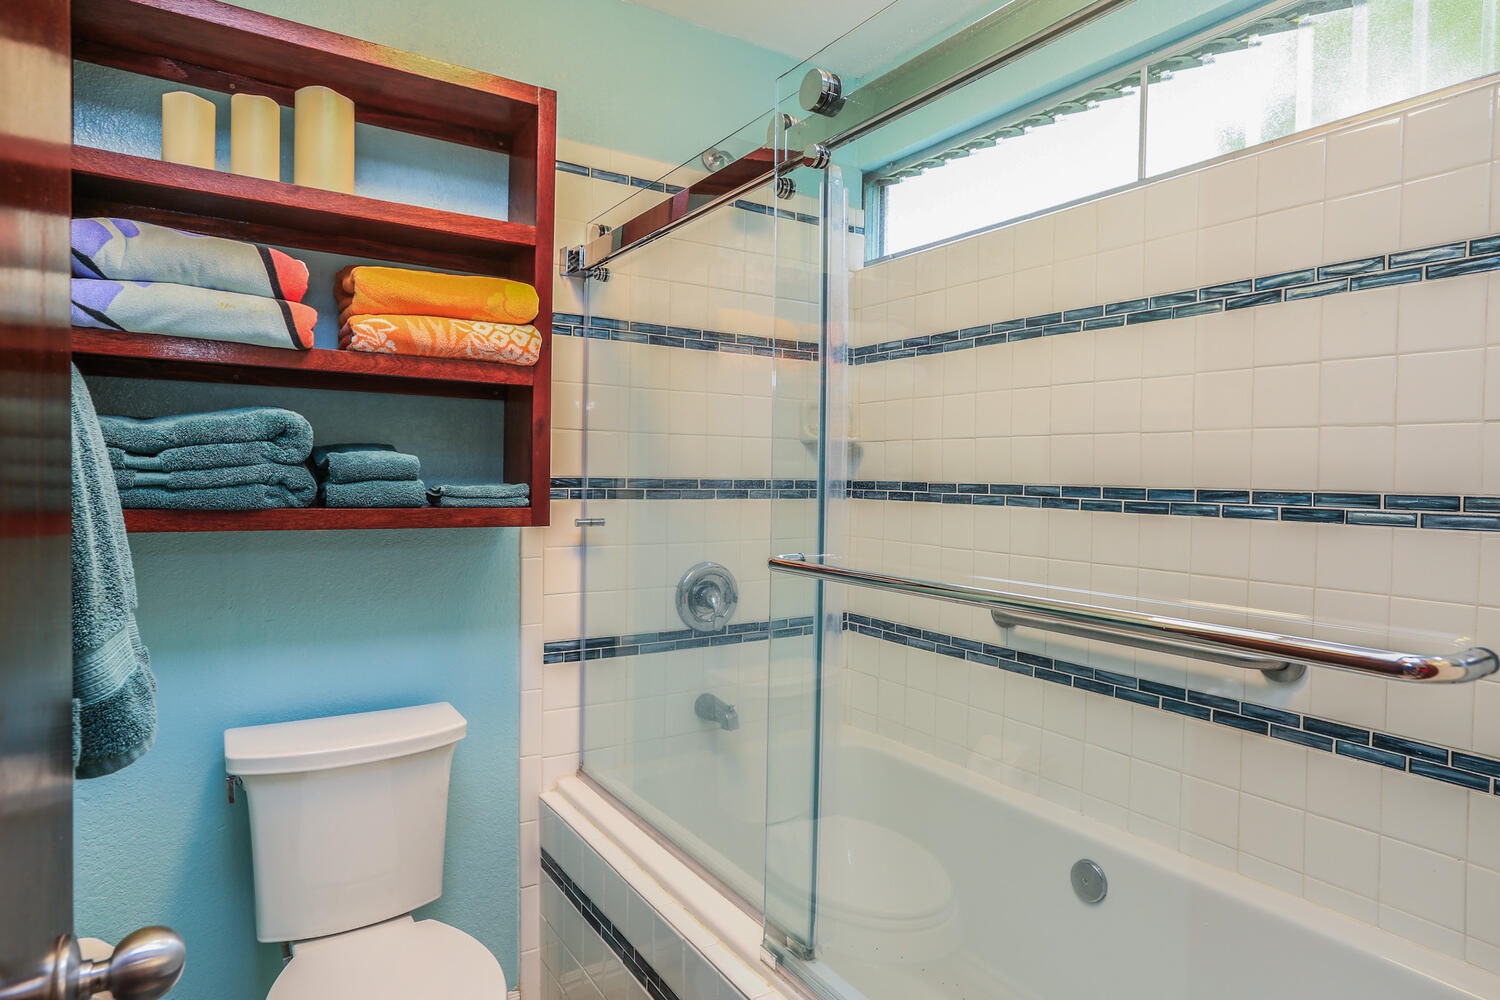 Princeville Vacation Rentals, Hideaway Haven - Bathroom bathtub/shower on a glass enclosure